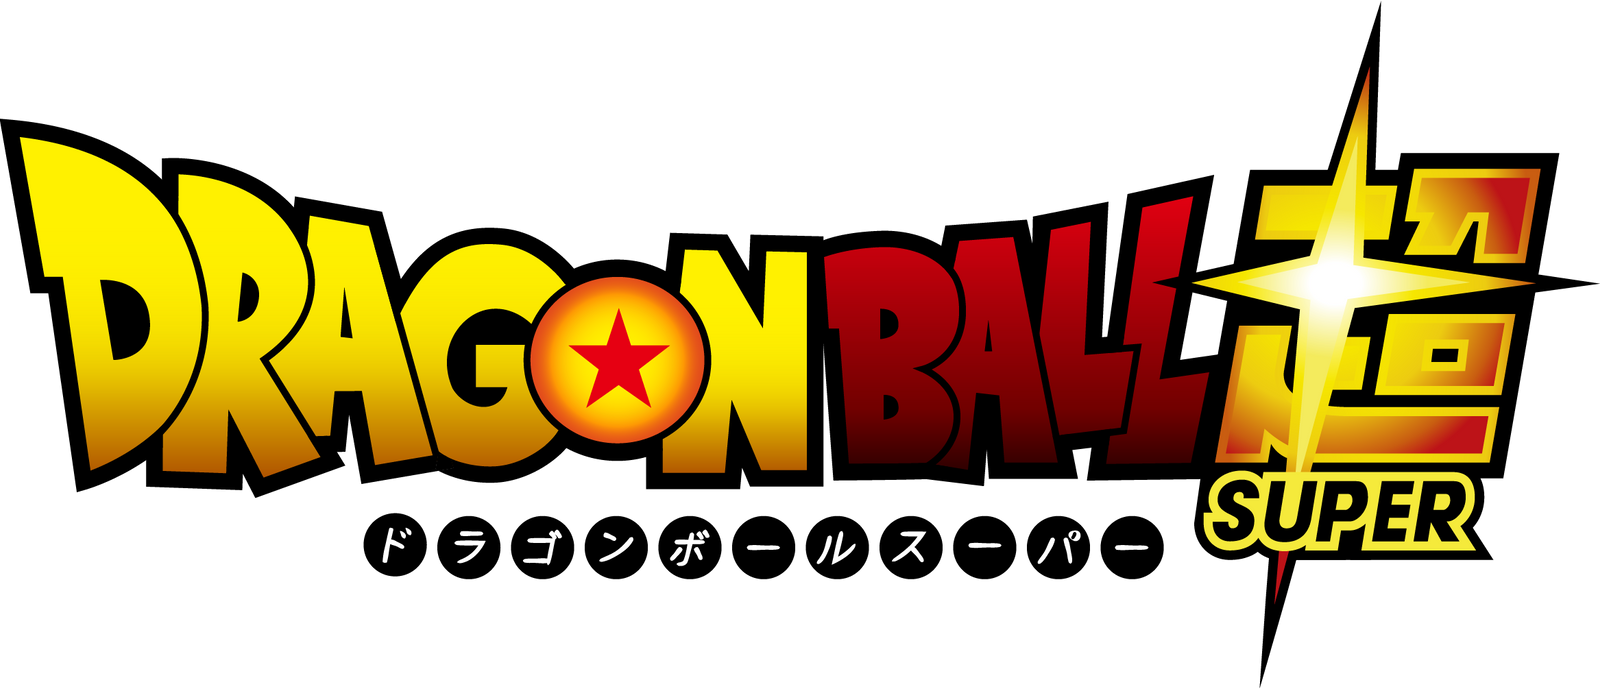 Dragon Ball Super Logo Orig - By ShikoMT by ShikoMT on DeviantArt